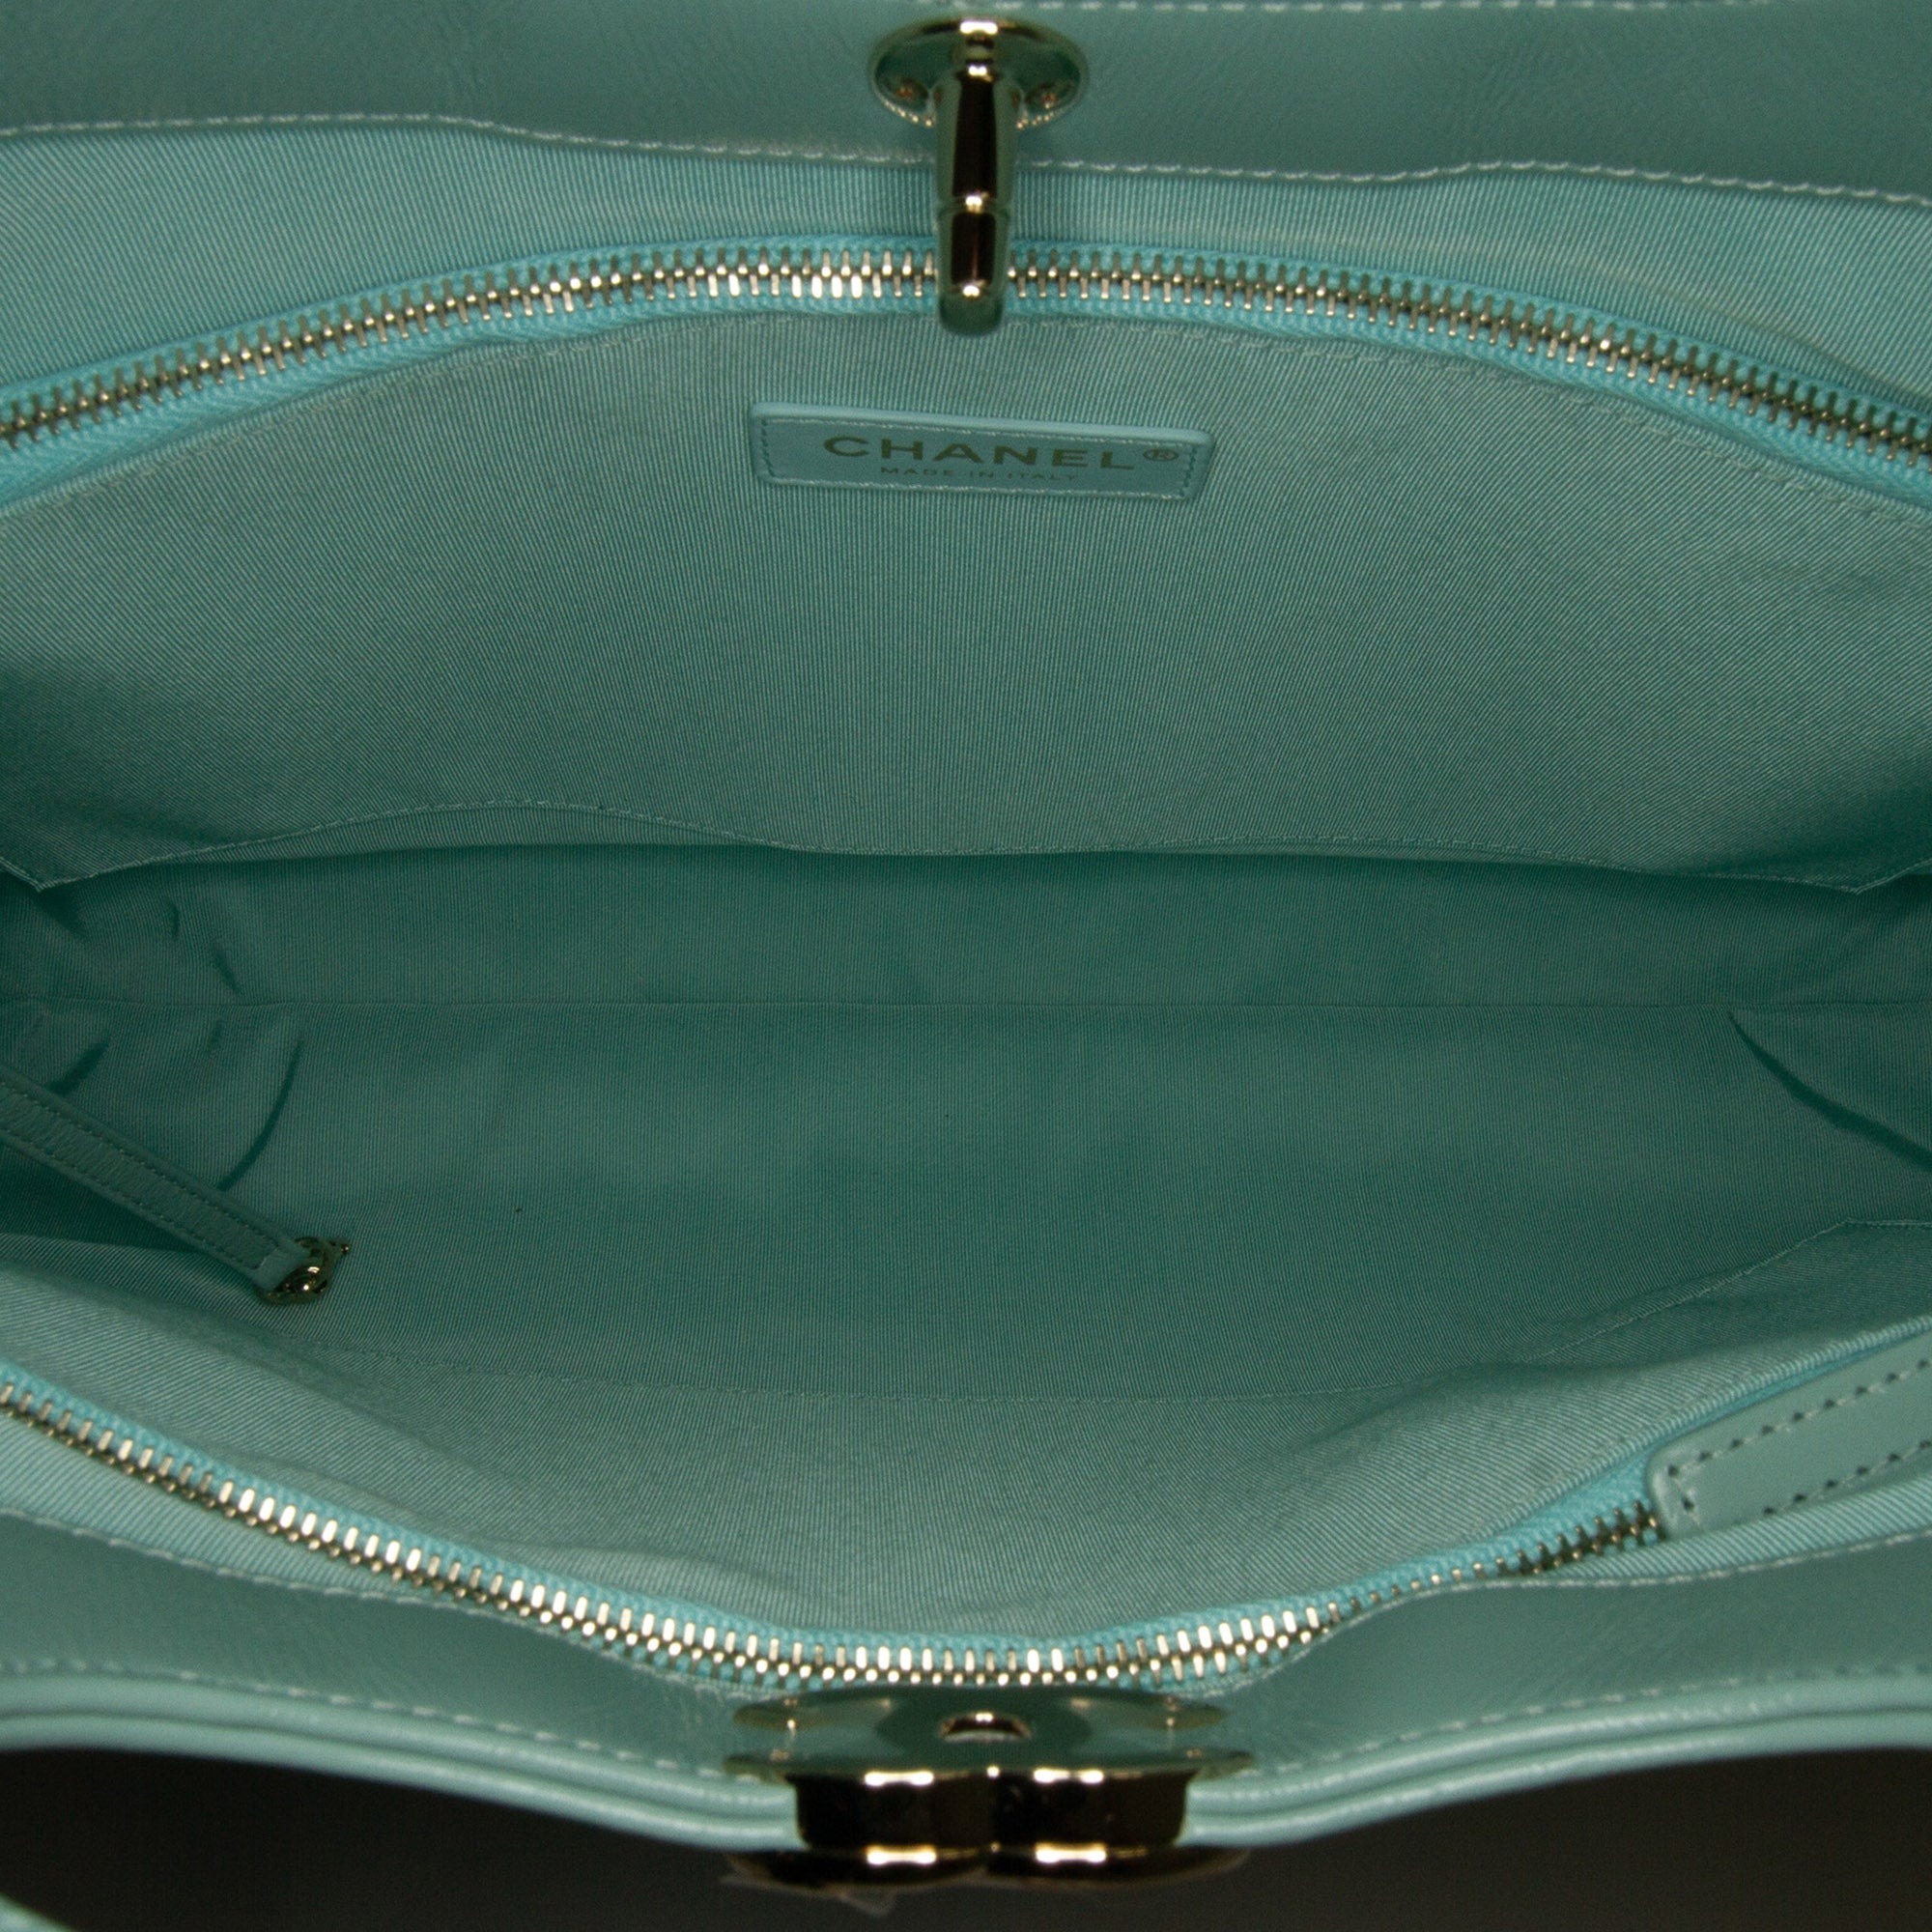 Chanel 31 Bag Large Light Blue Calfskin Silver